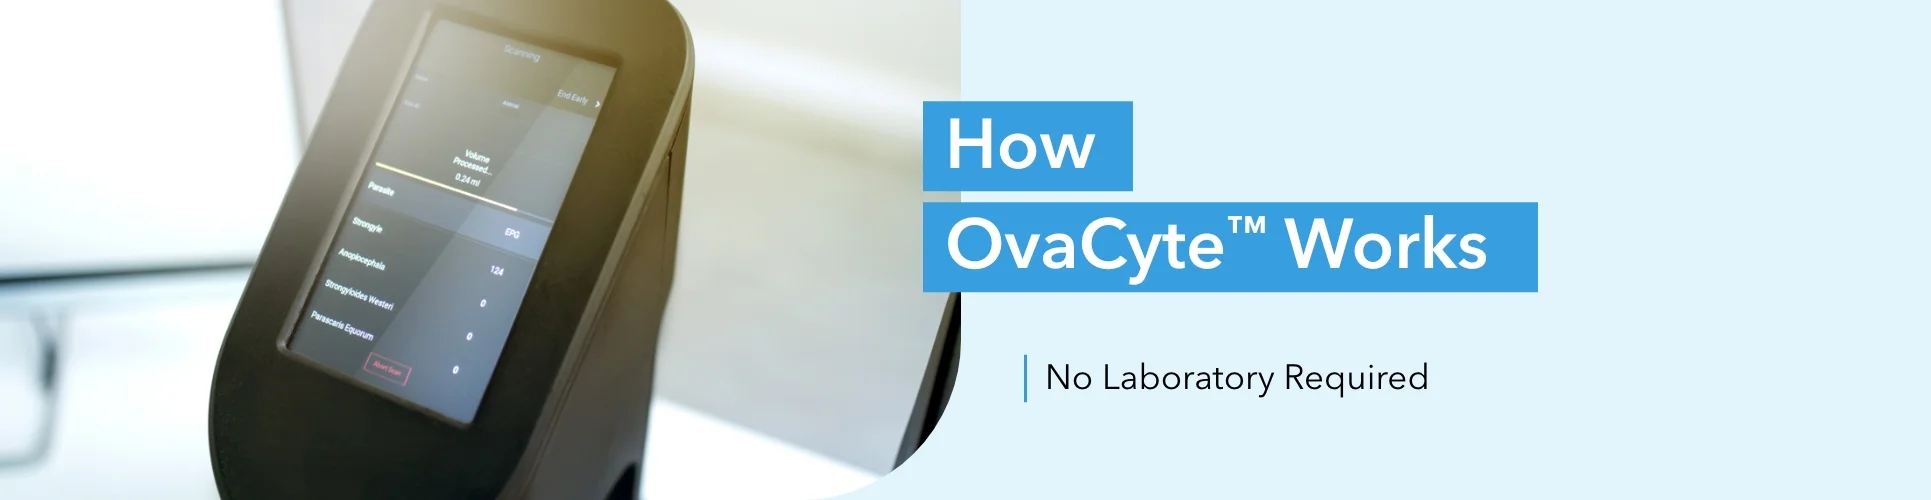 How OvaCyte Works